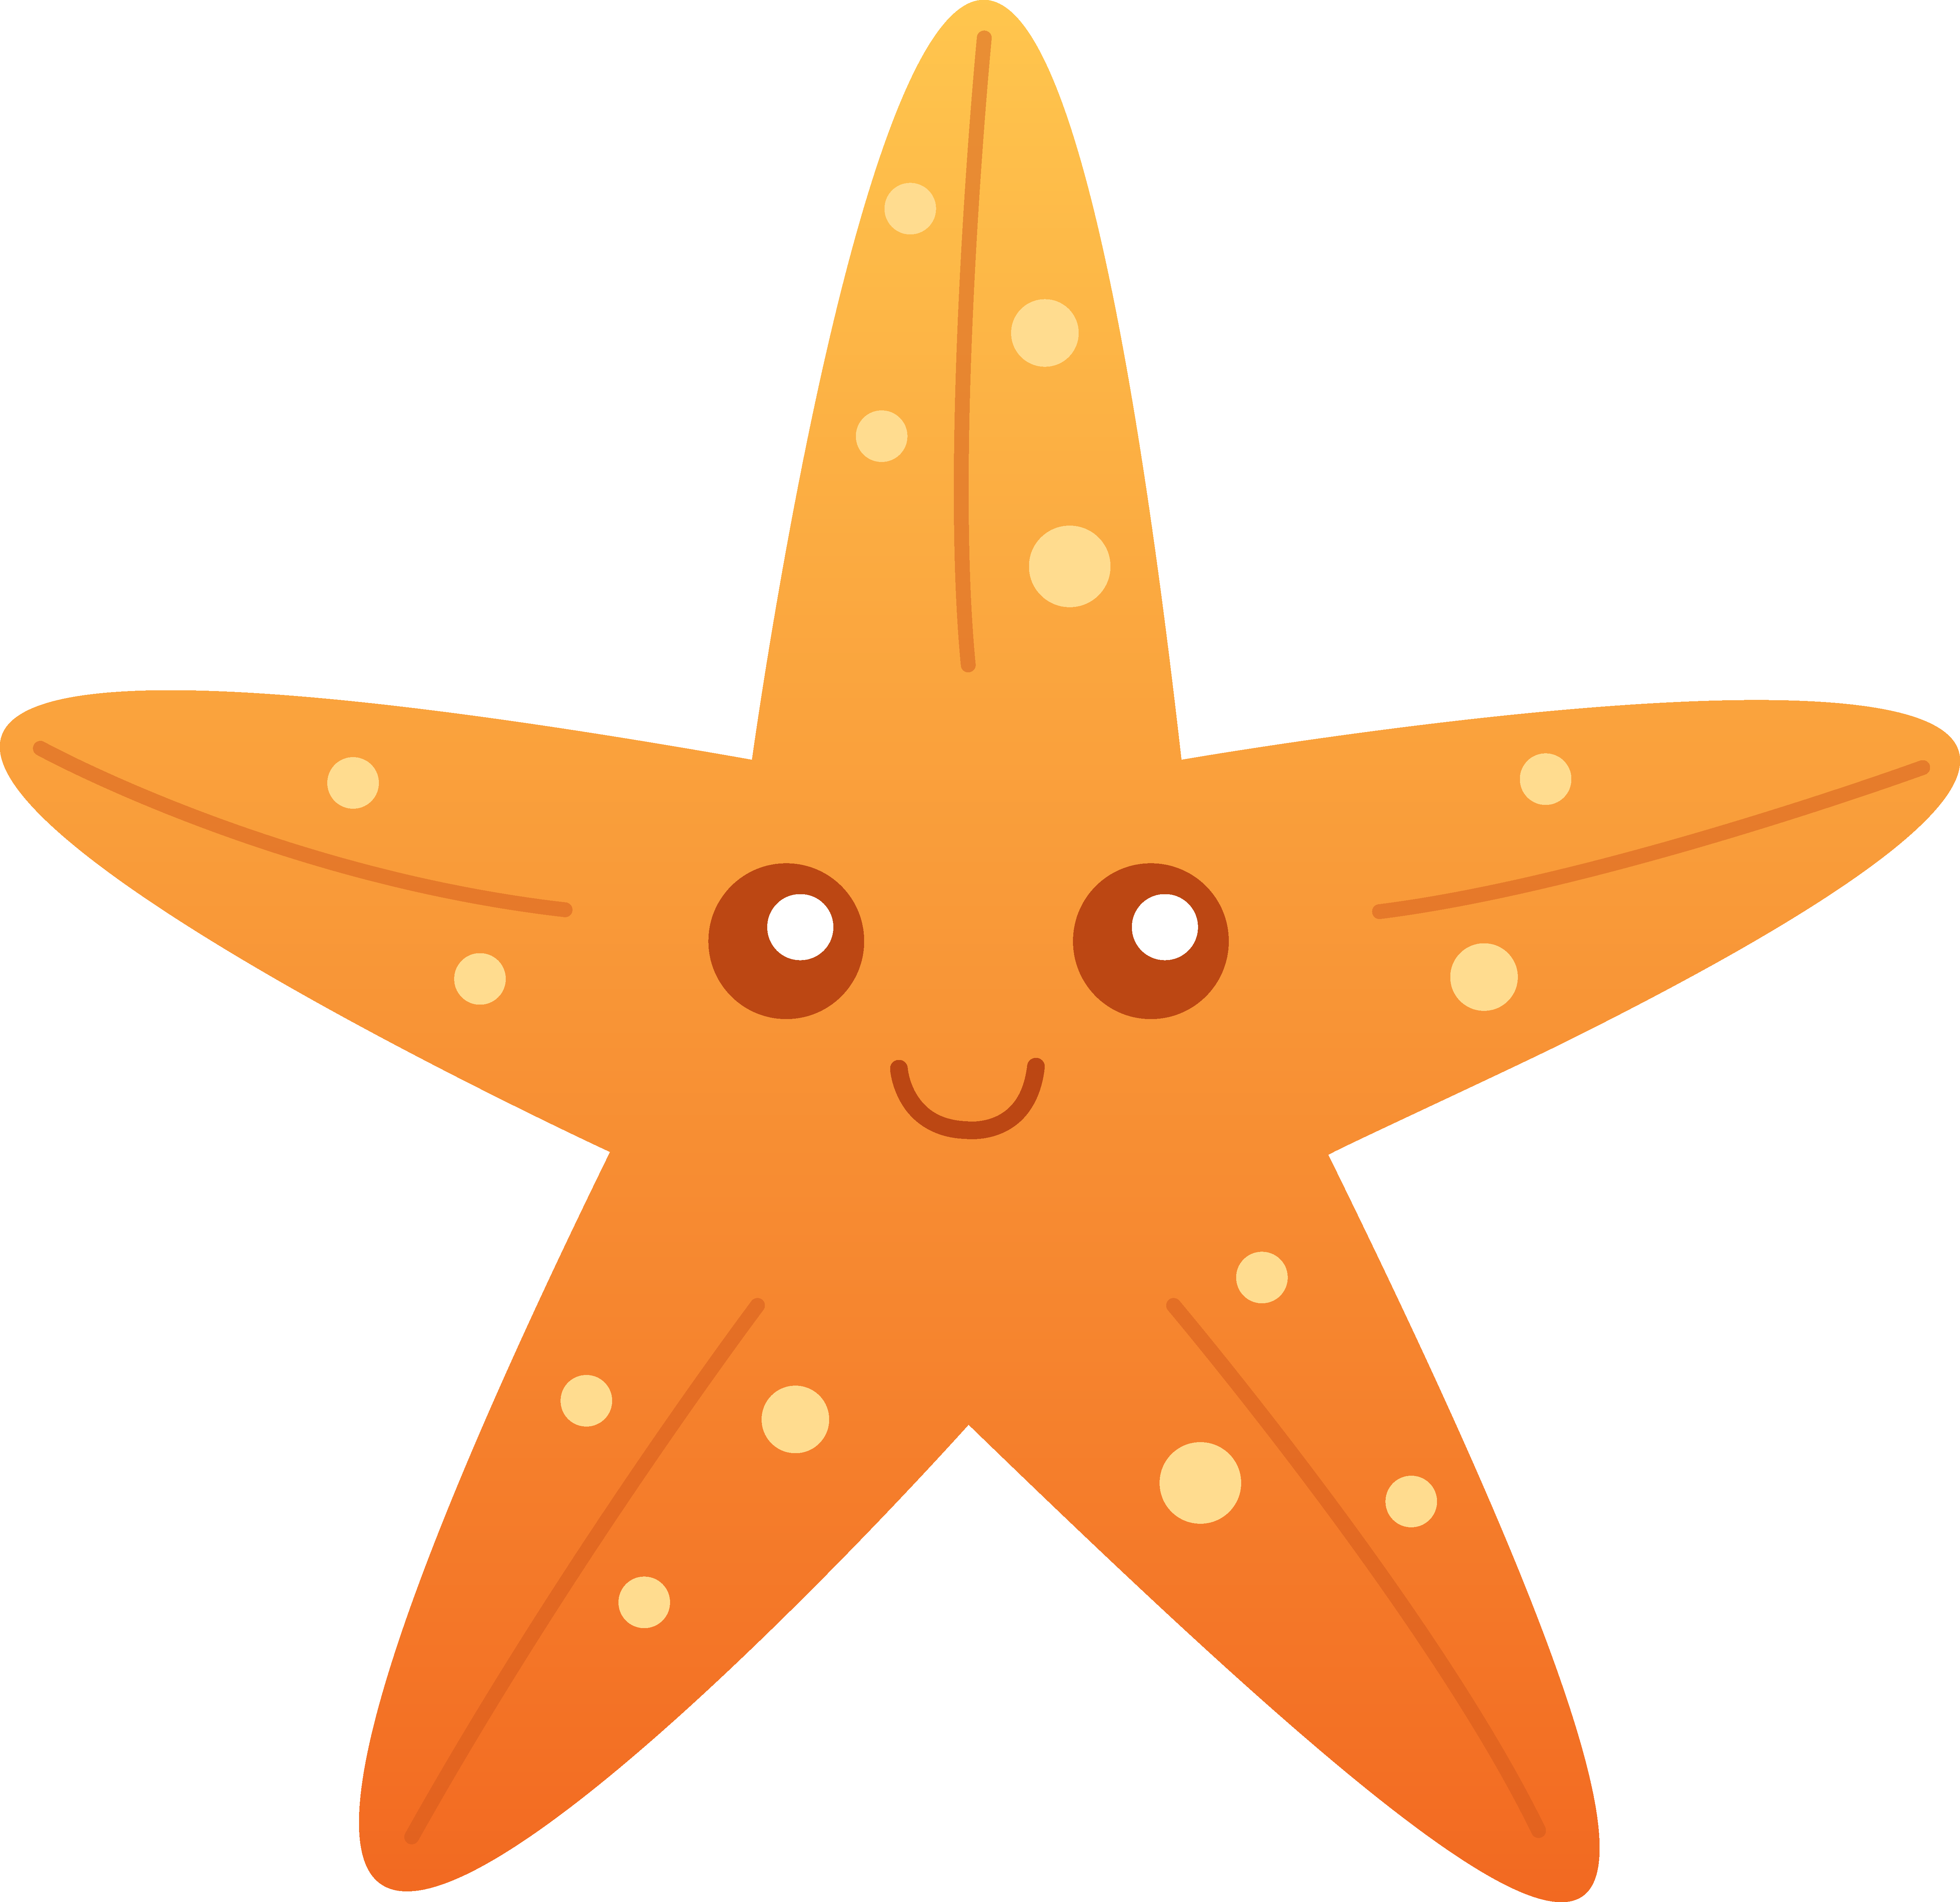 Sea star starfish.